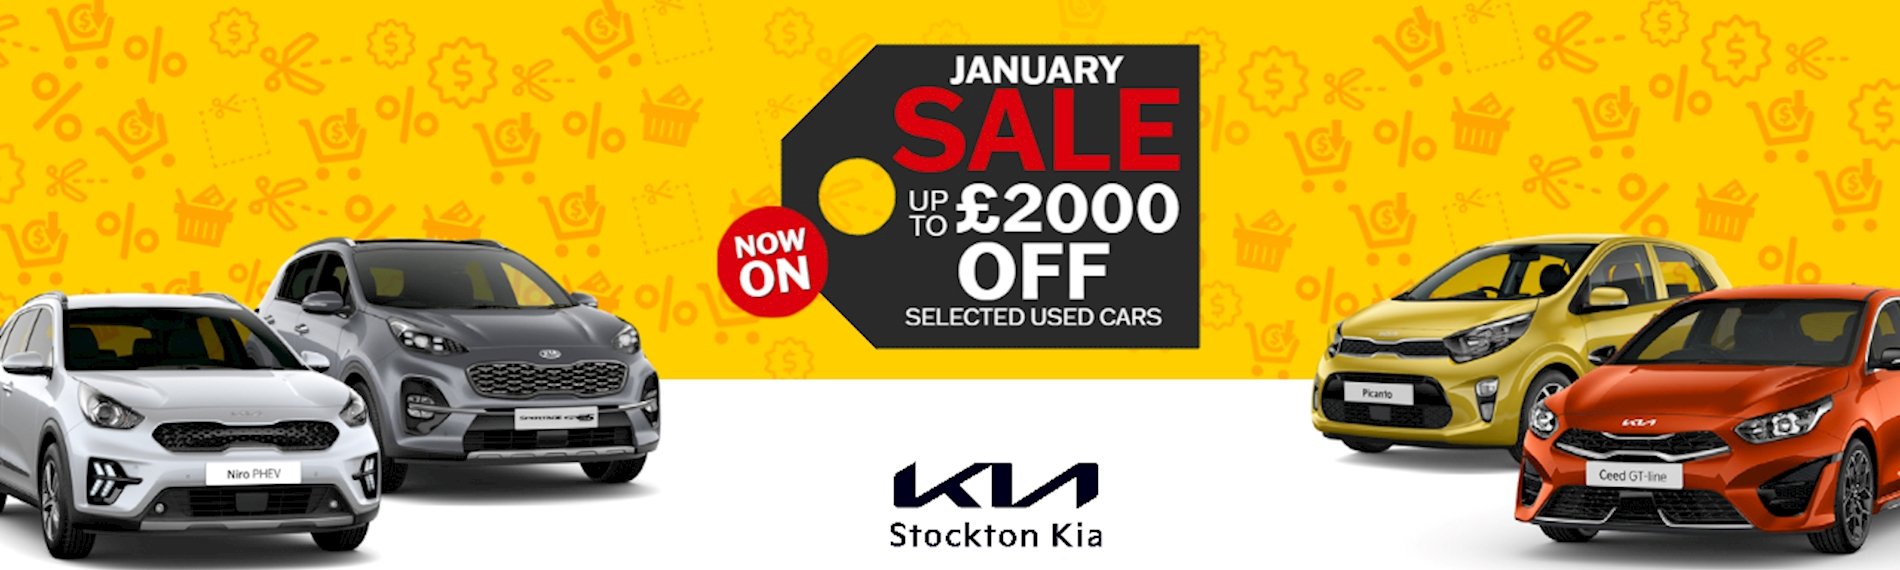 Stockton Kia January Sale 